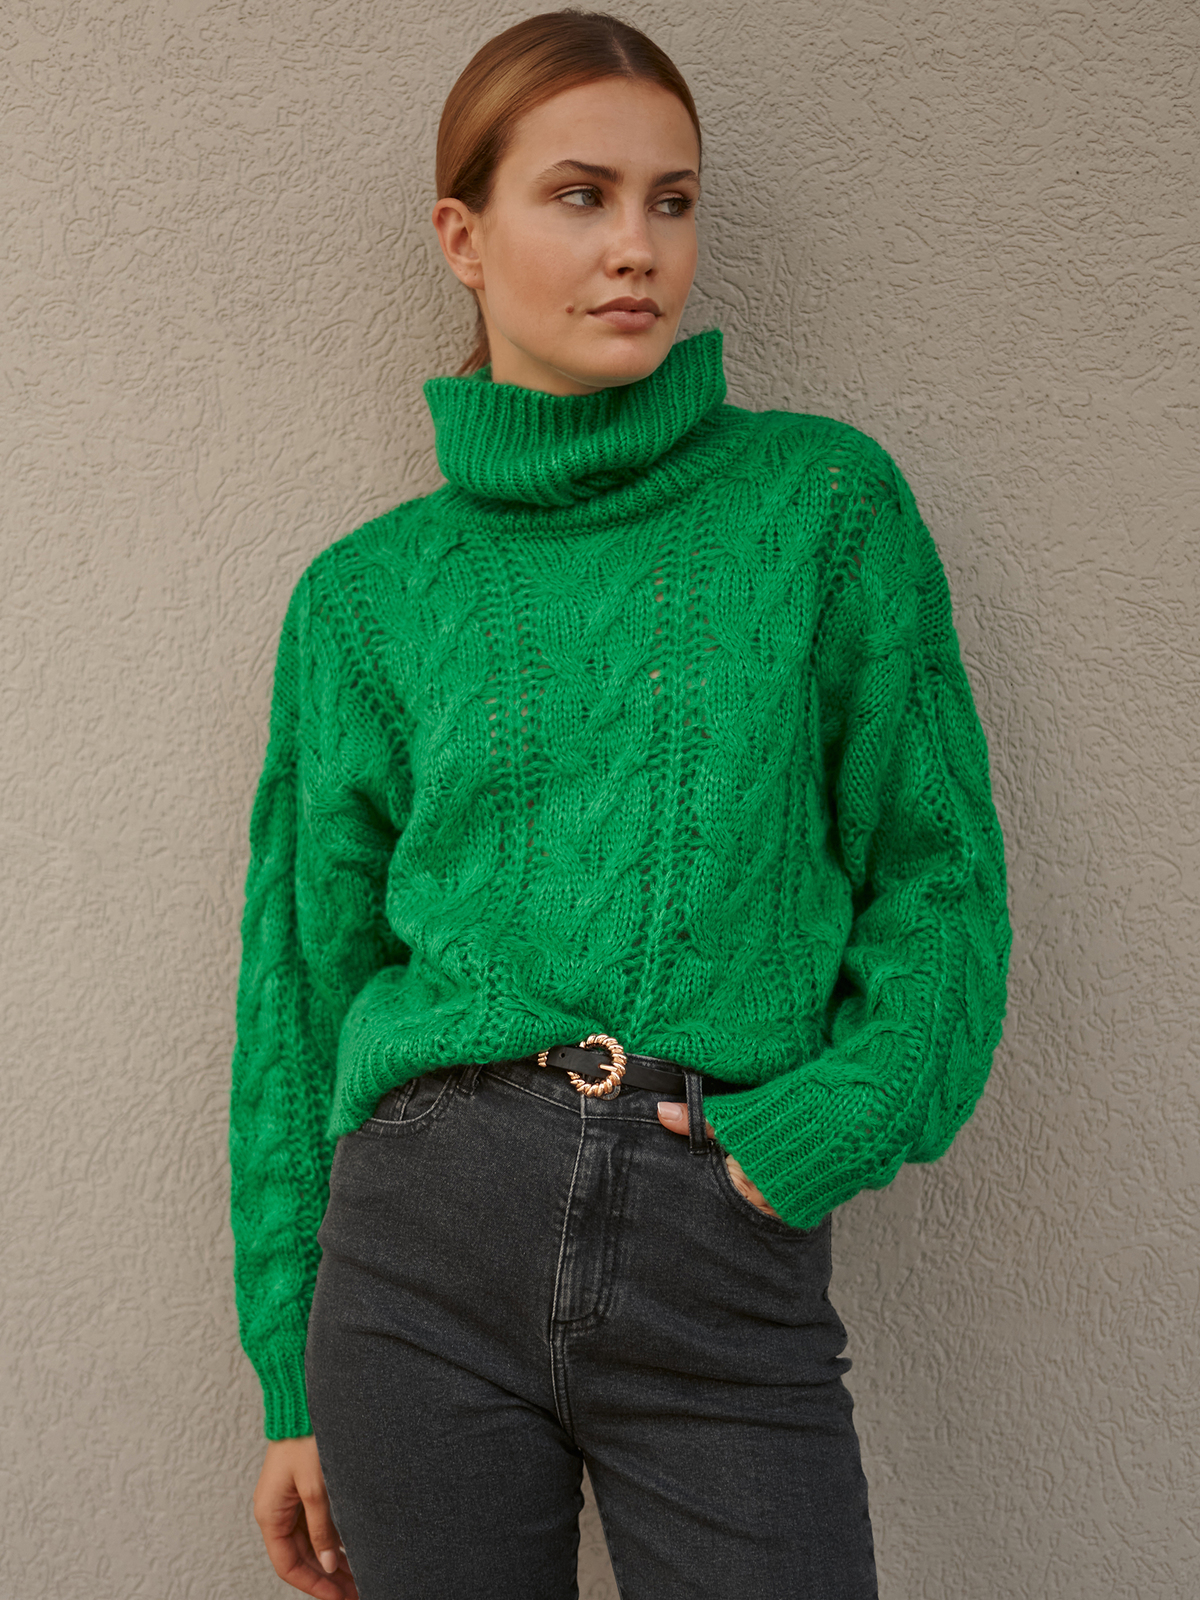 Pulover tricotat verde cu croi larg pe gat - Top Secret